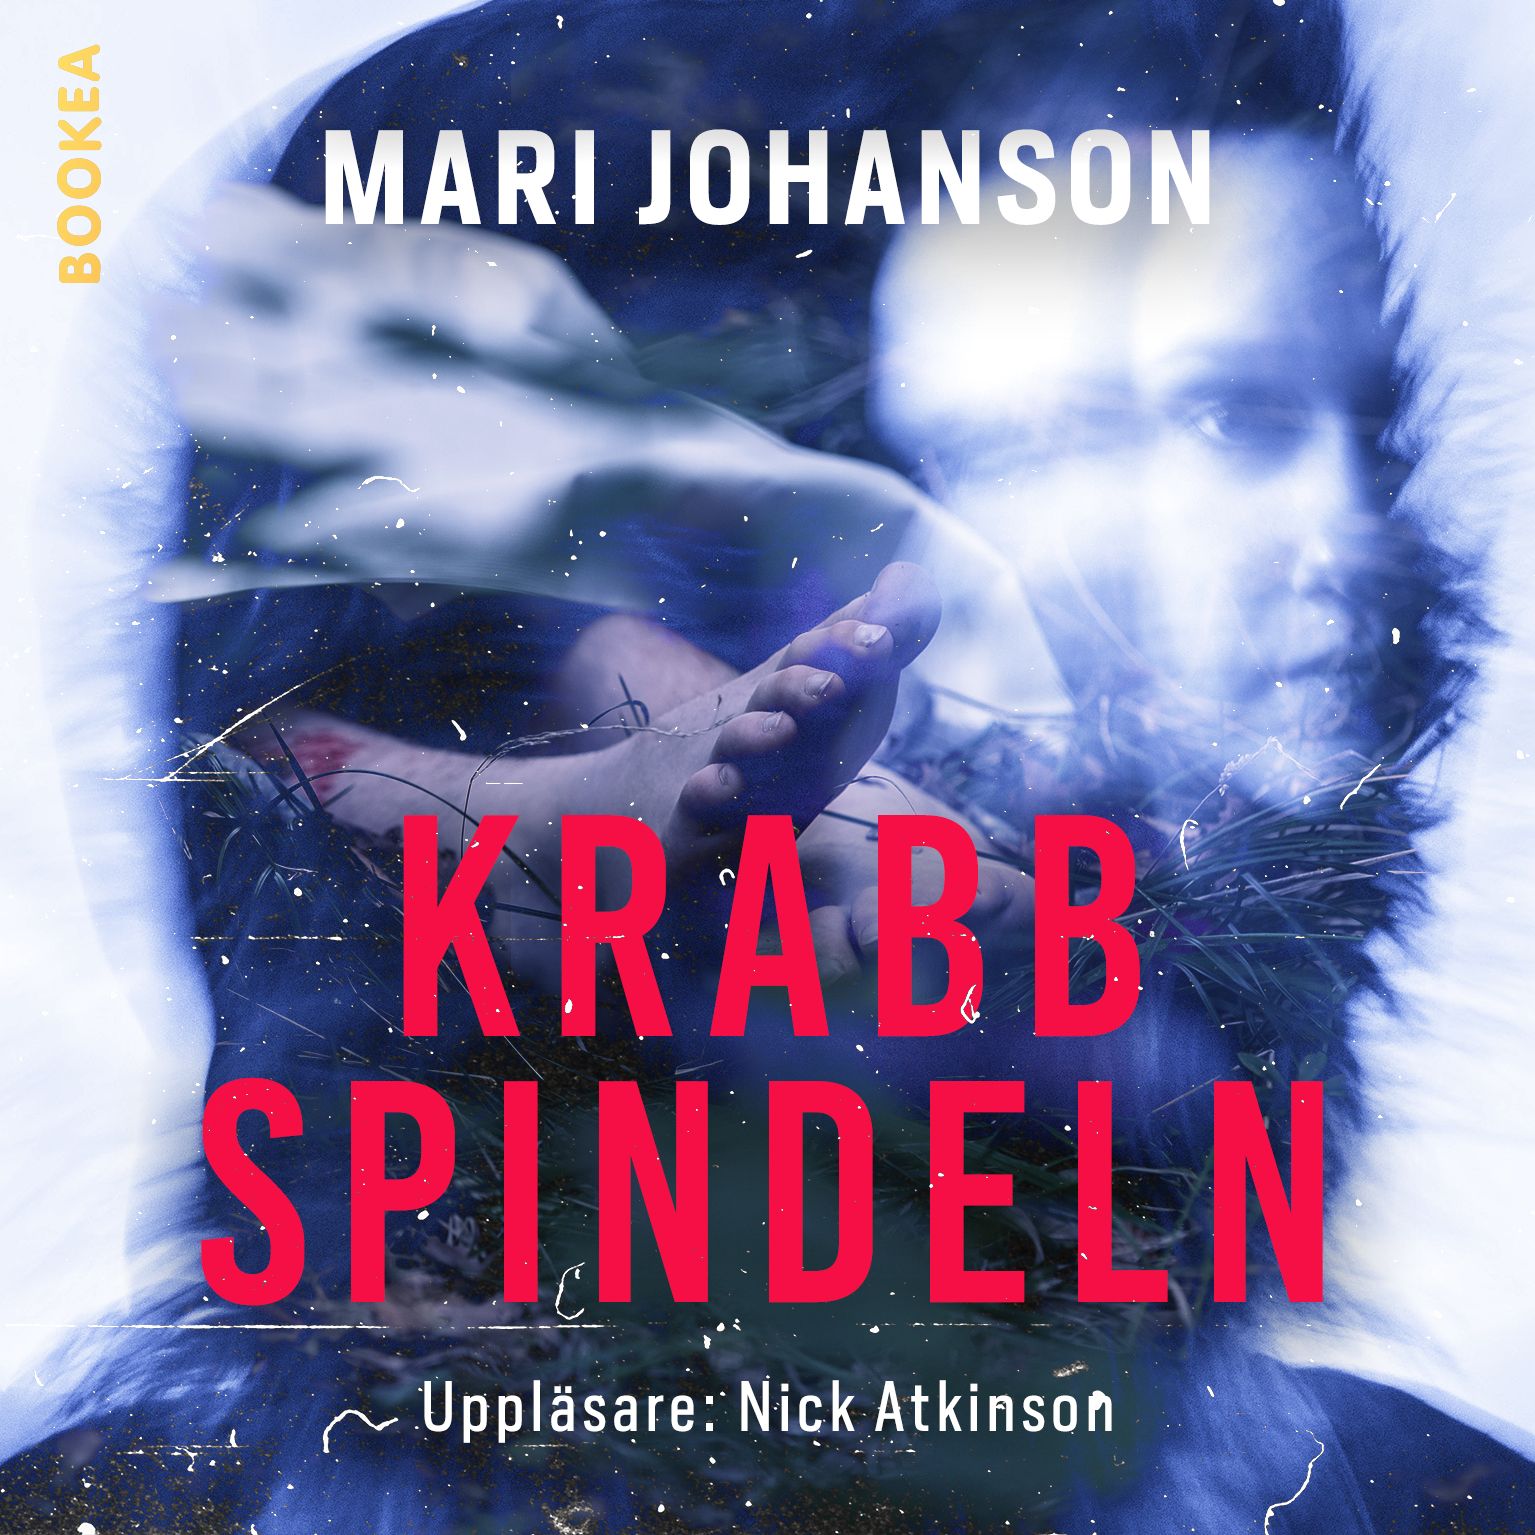 Krabbspindeln, eBook by Mari Johanson